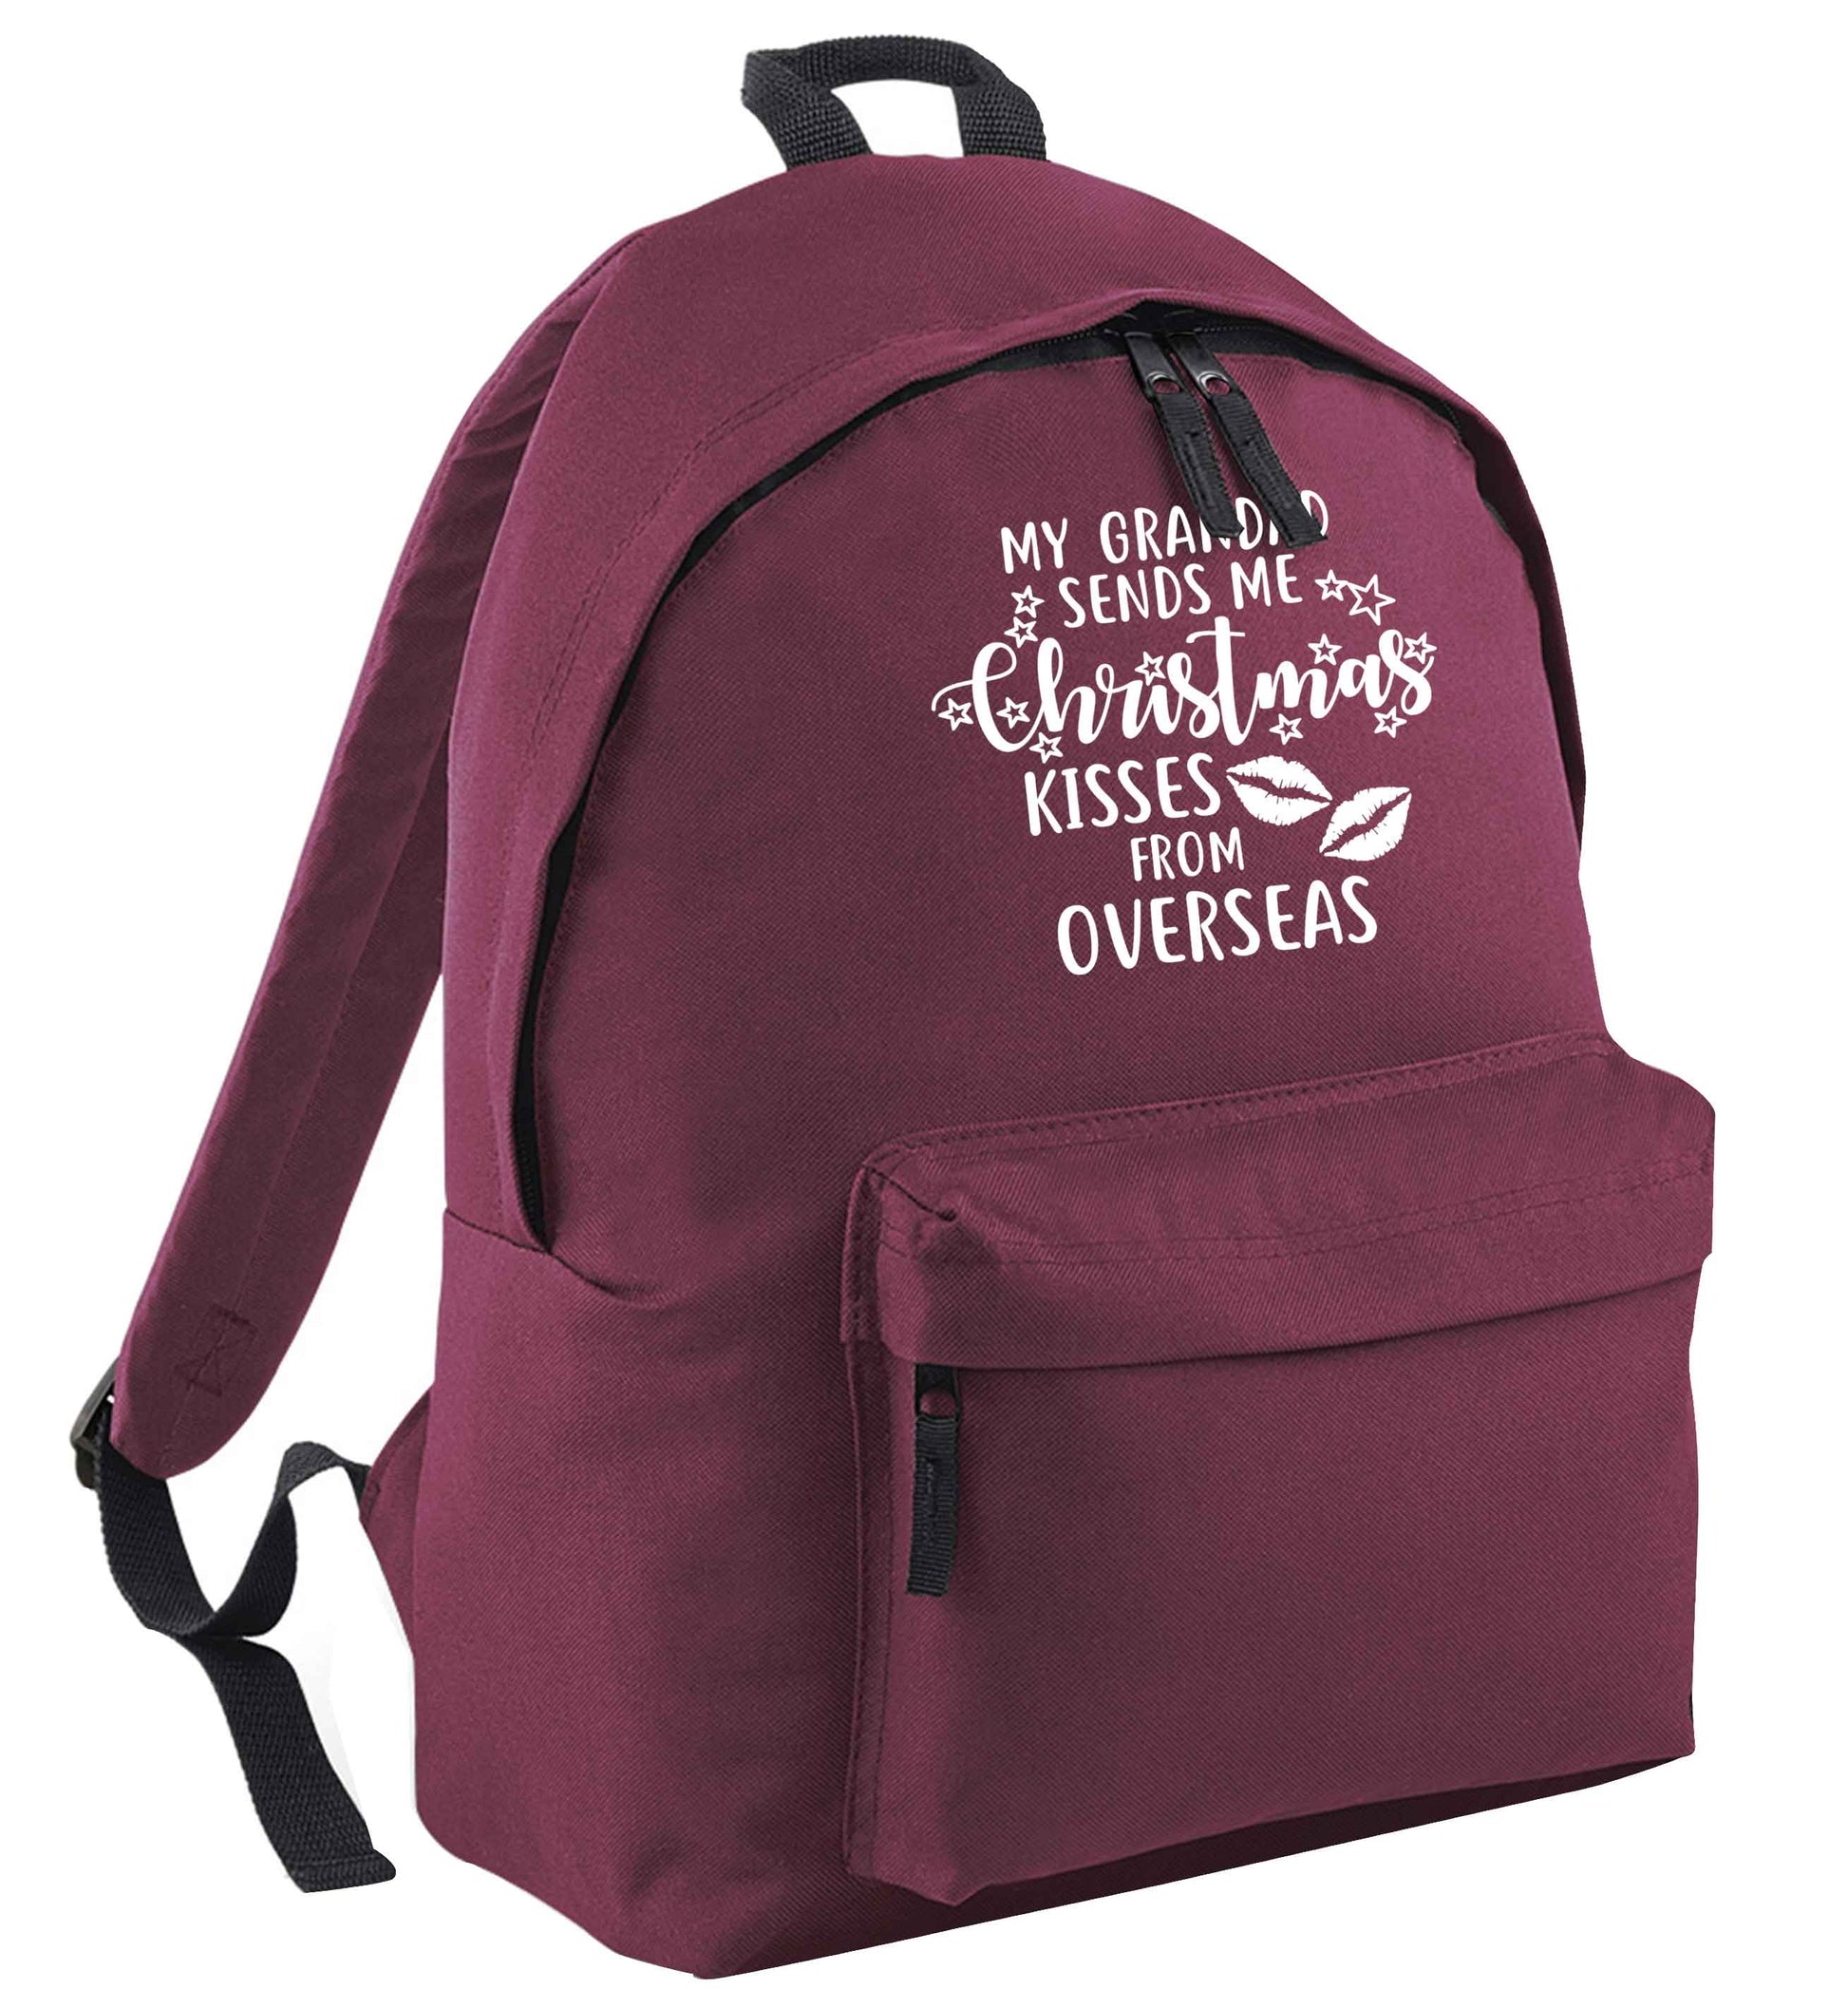 Grandad Christmas Kisses Overseas maroon adults backpack